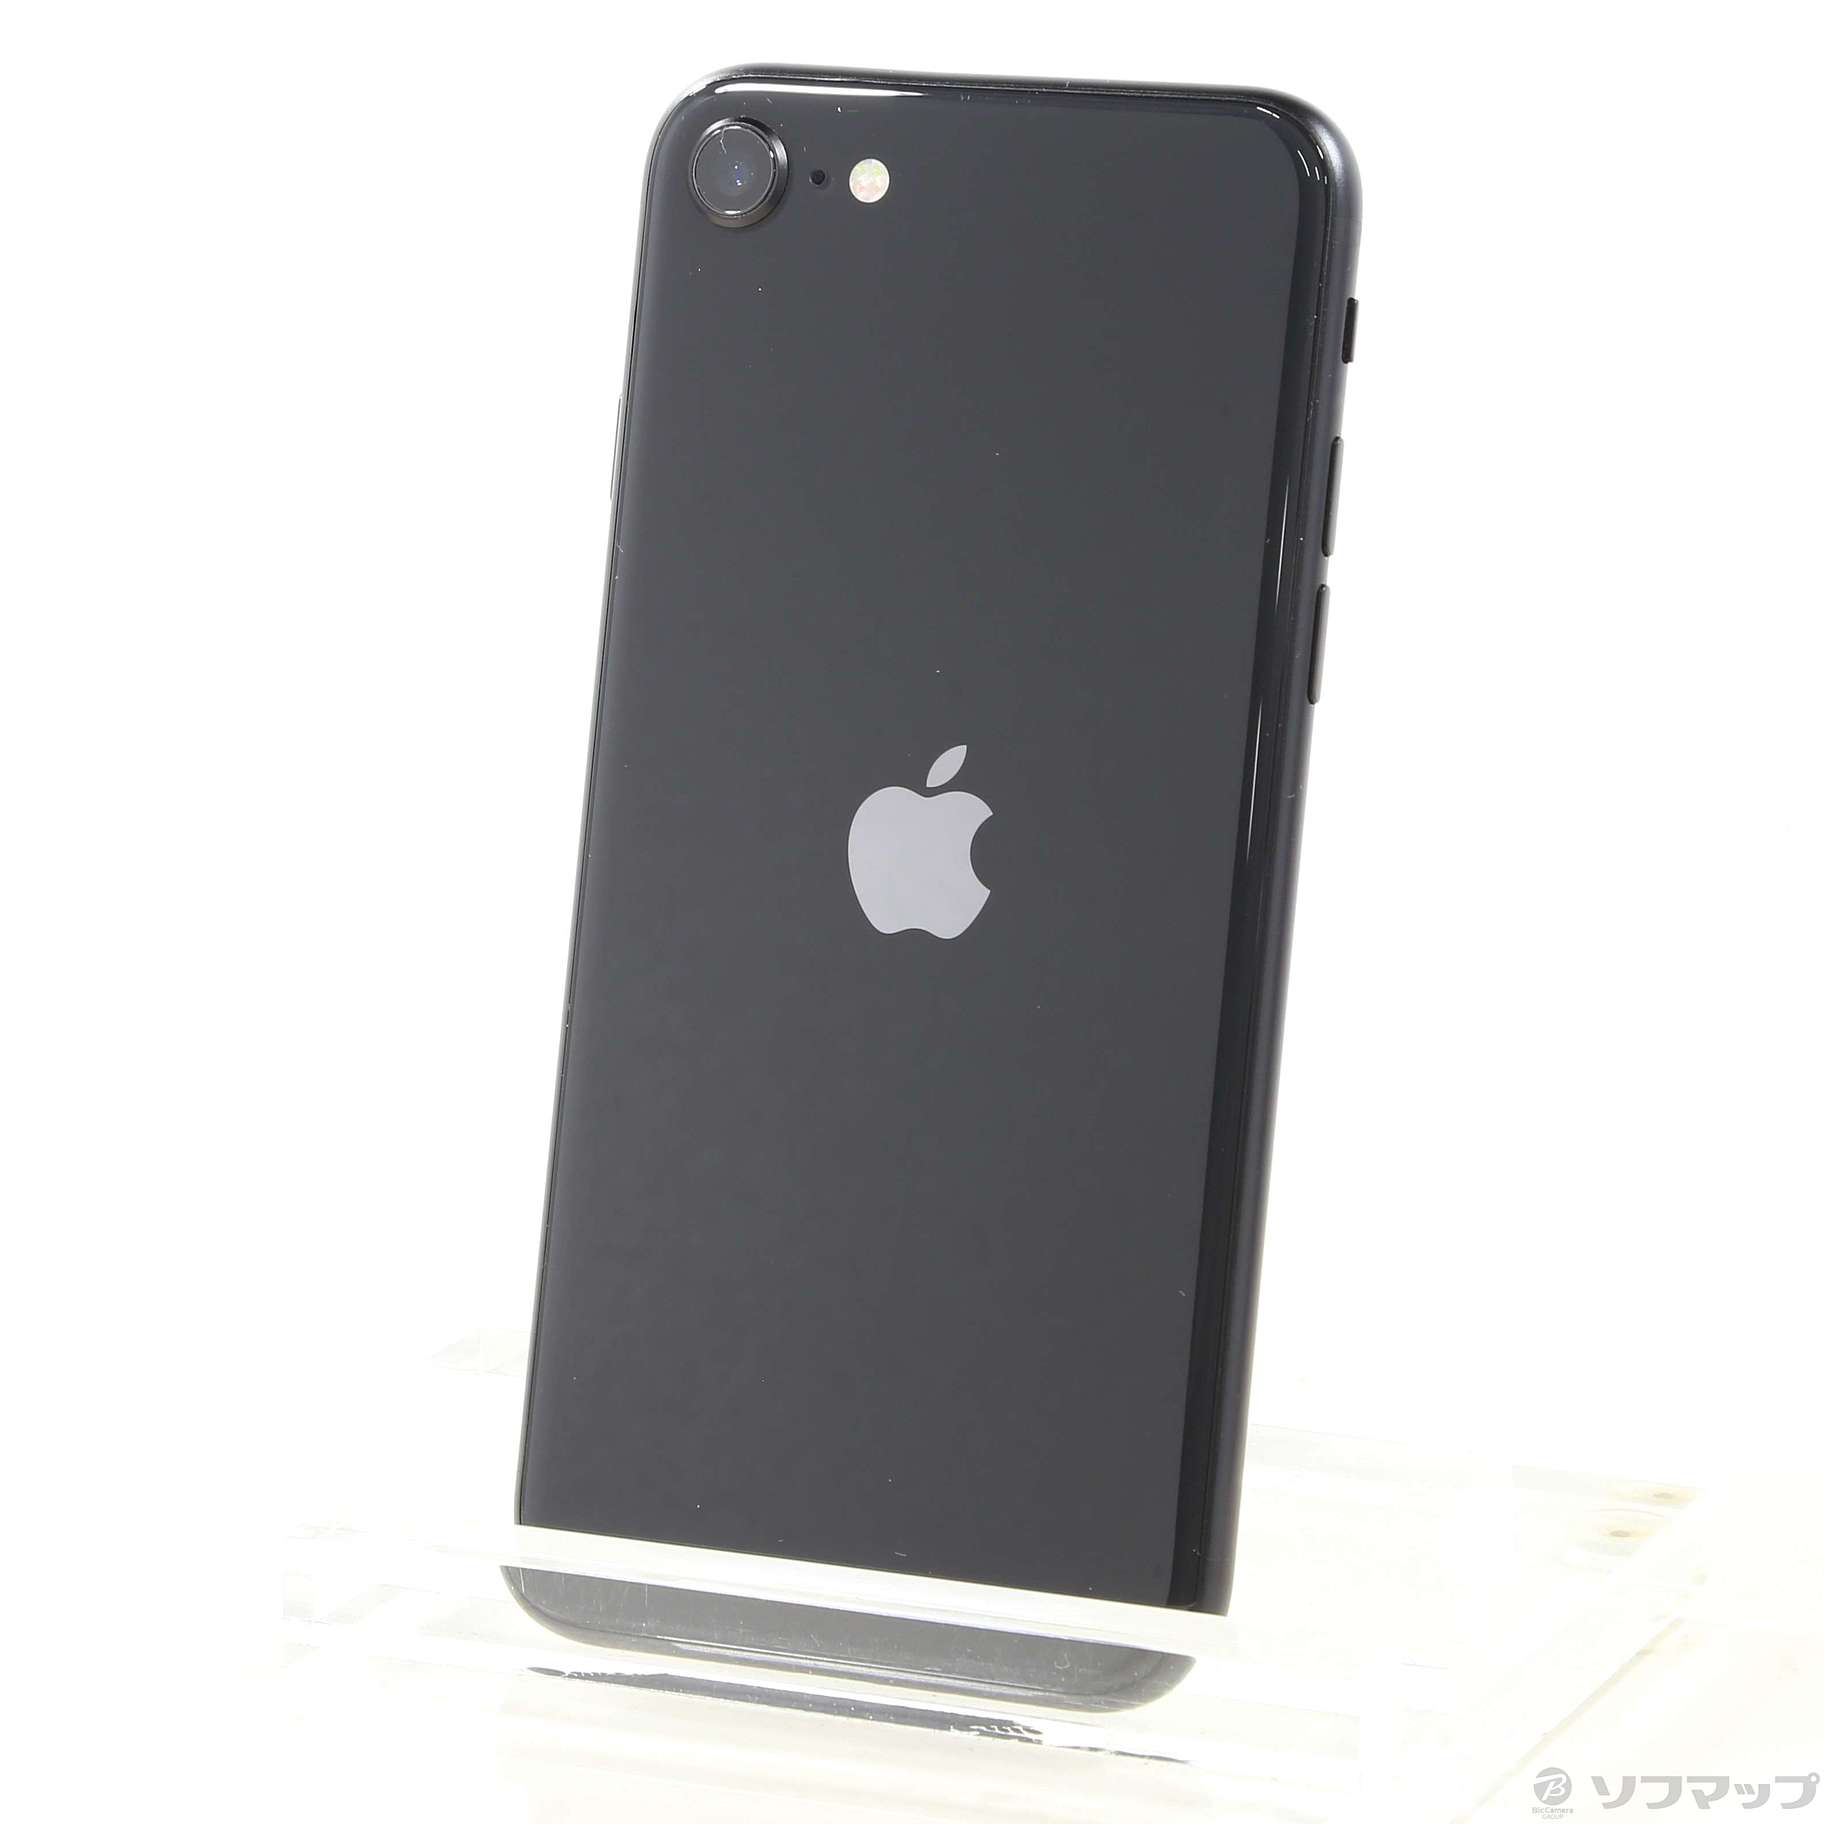 iPhone SE 第2世代 (SE2) ホワイト 64 GB Softbank - スマートフォン本体